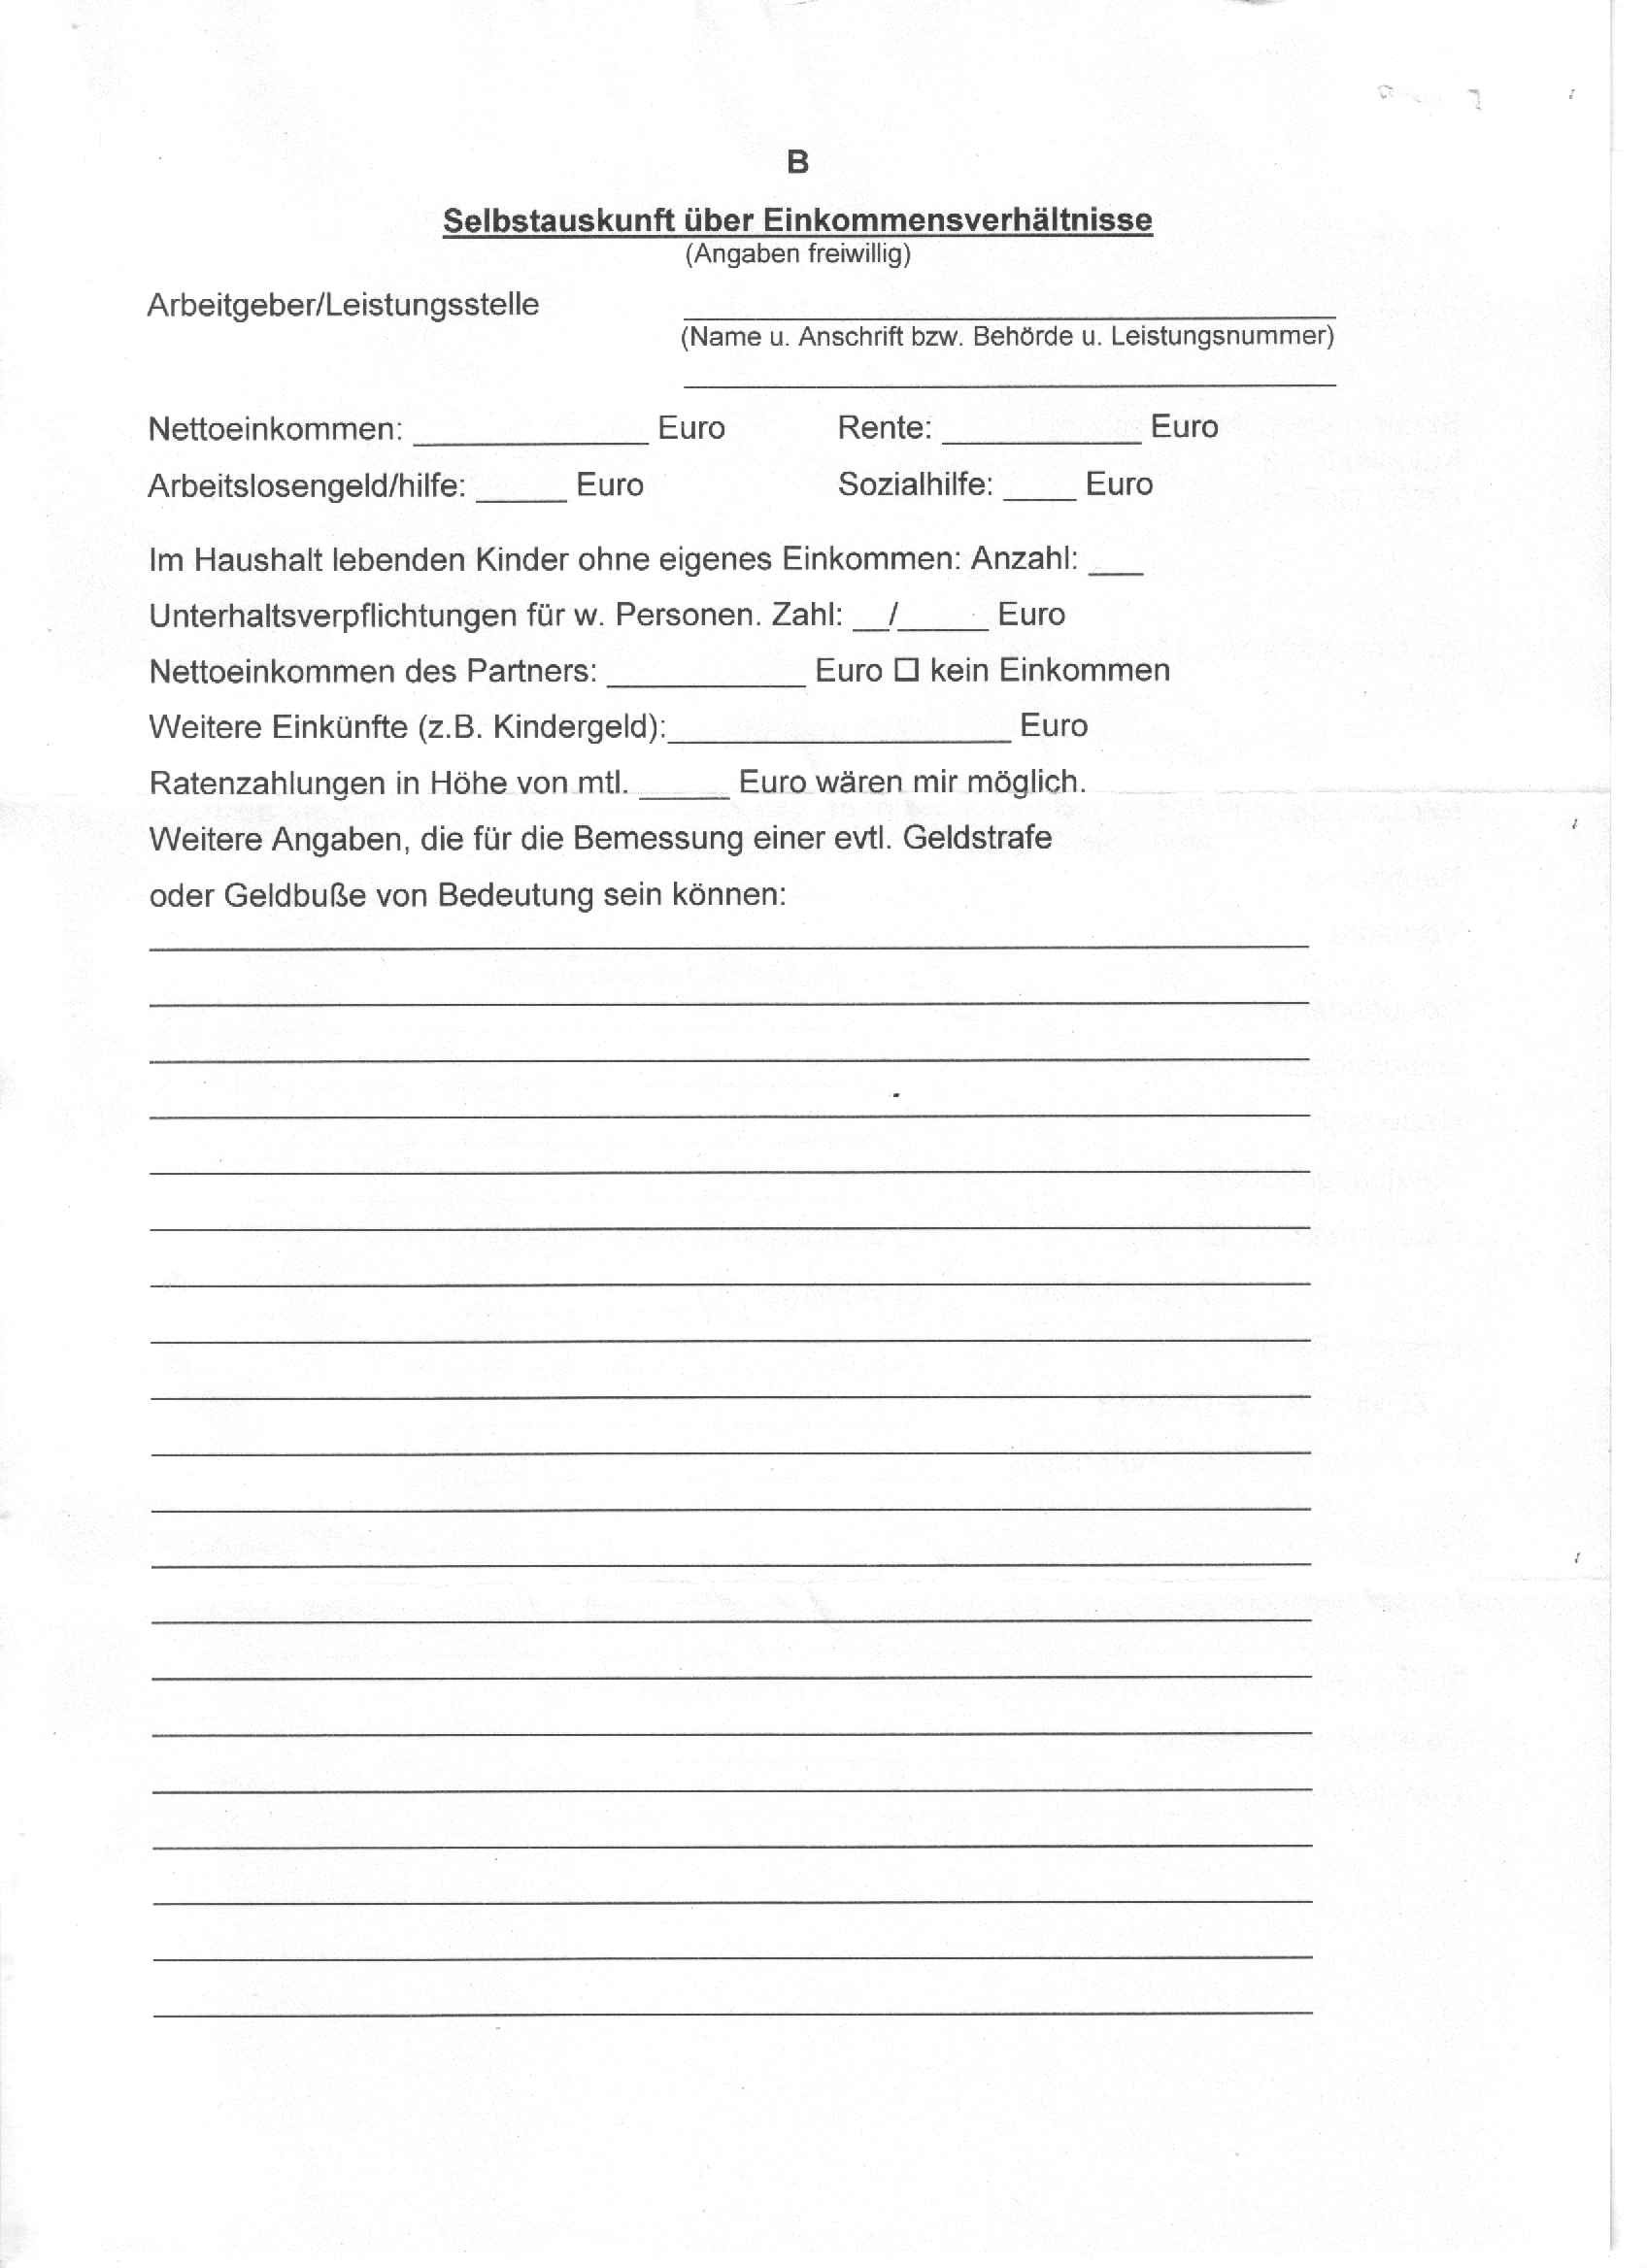 Bescheid der Staatsanwaltschaft Duisburg, Oberstaatsanwalt Wolfgang Seither, vom 05.11.2014, S. 4